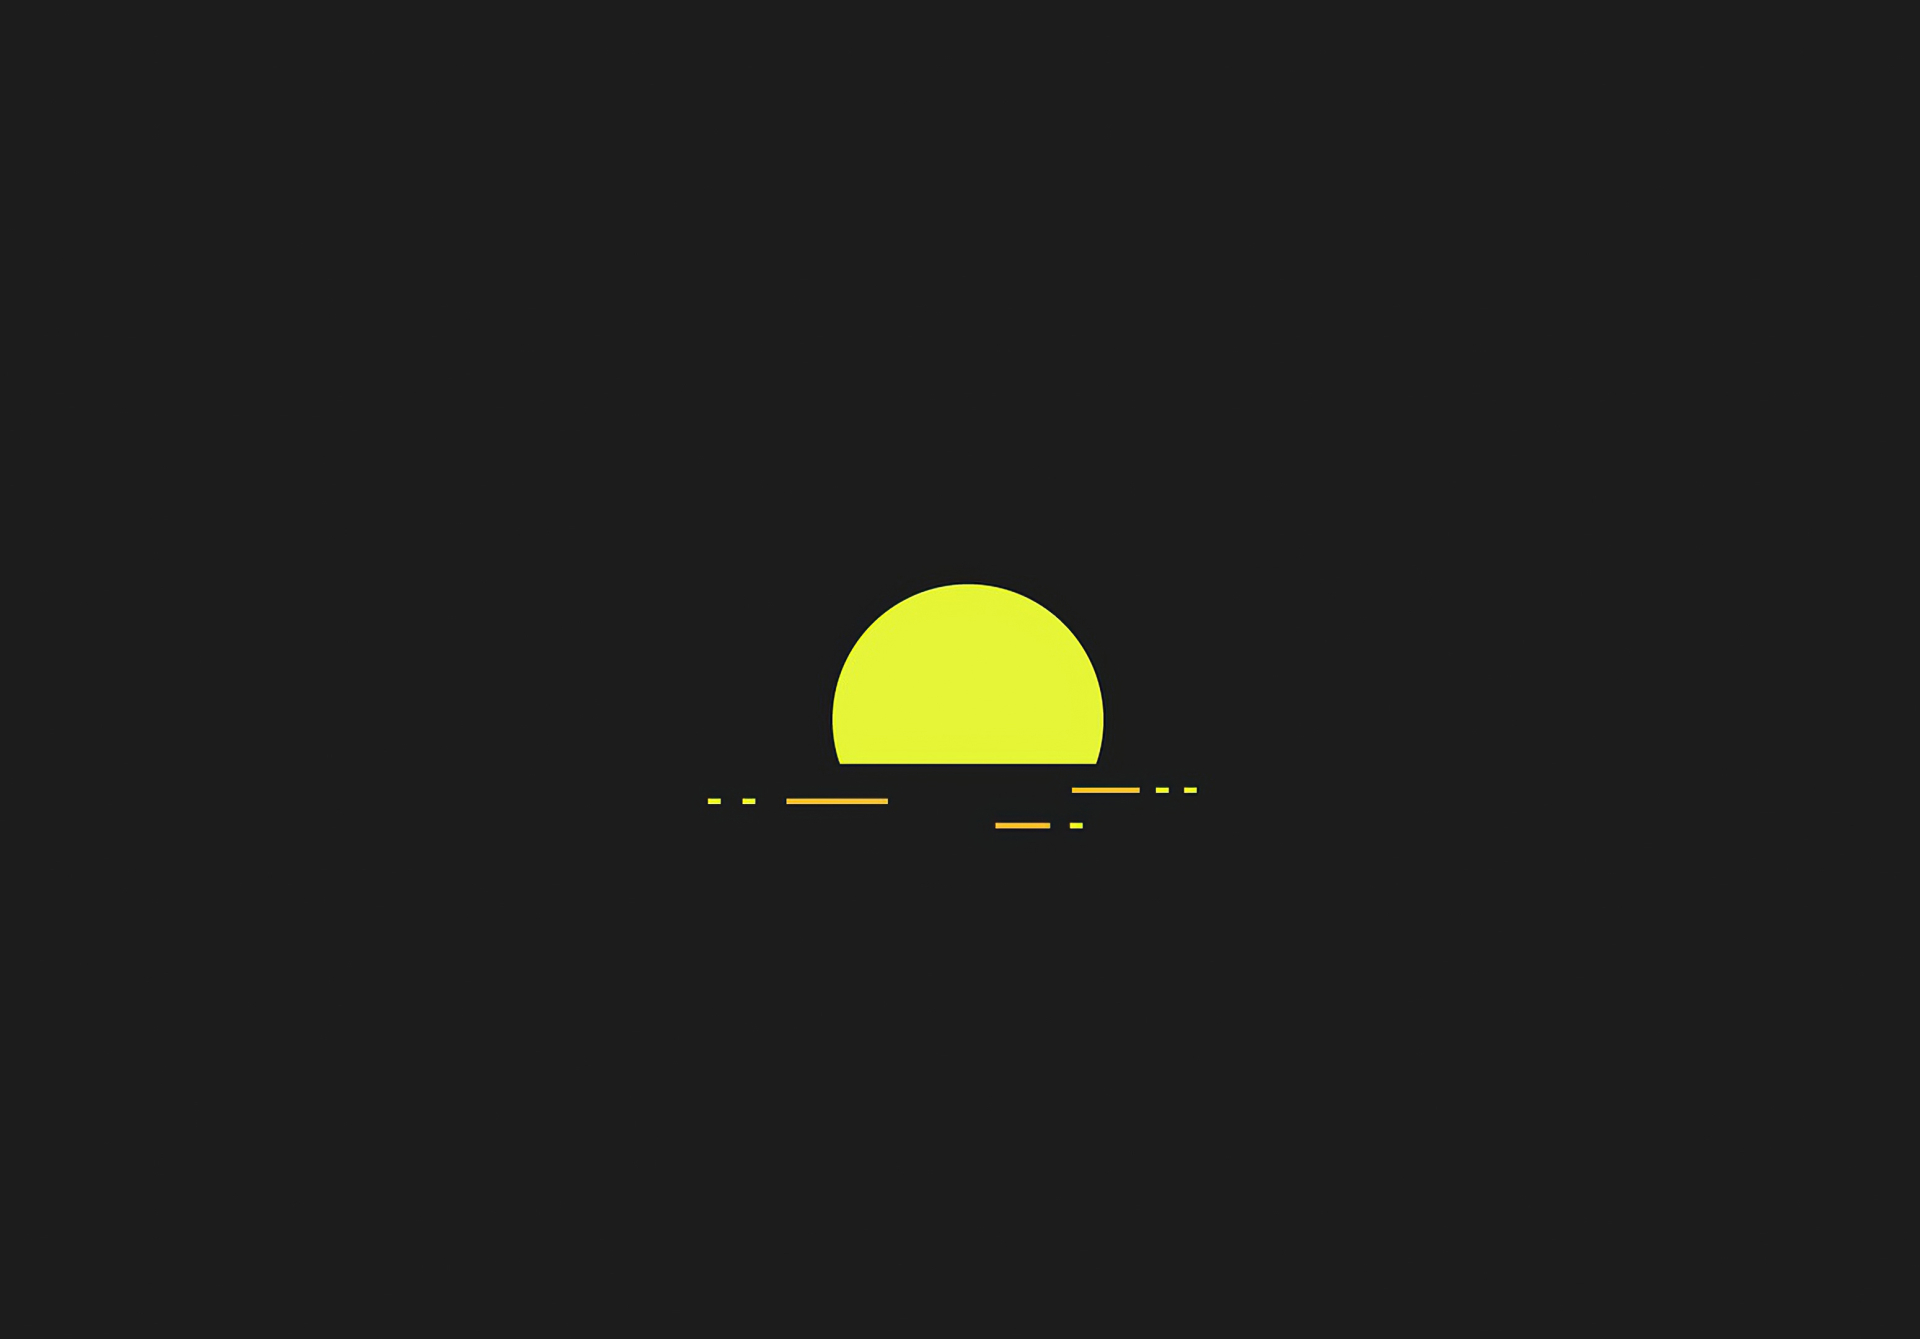 A yellow sun on a black background - Sun